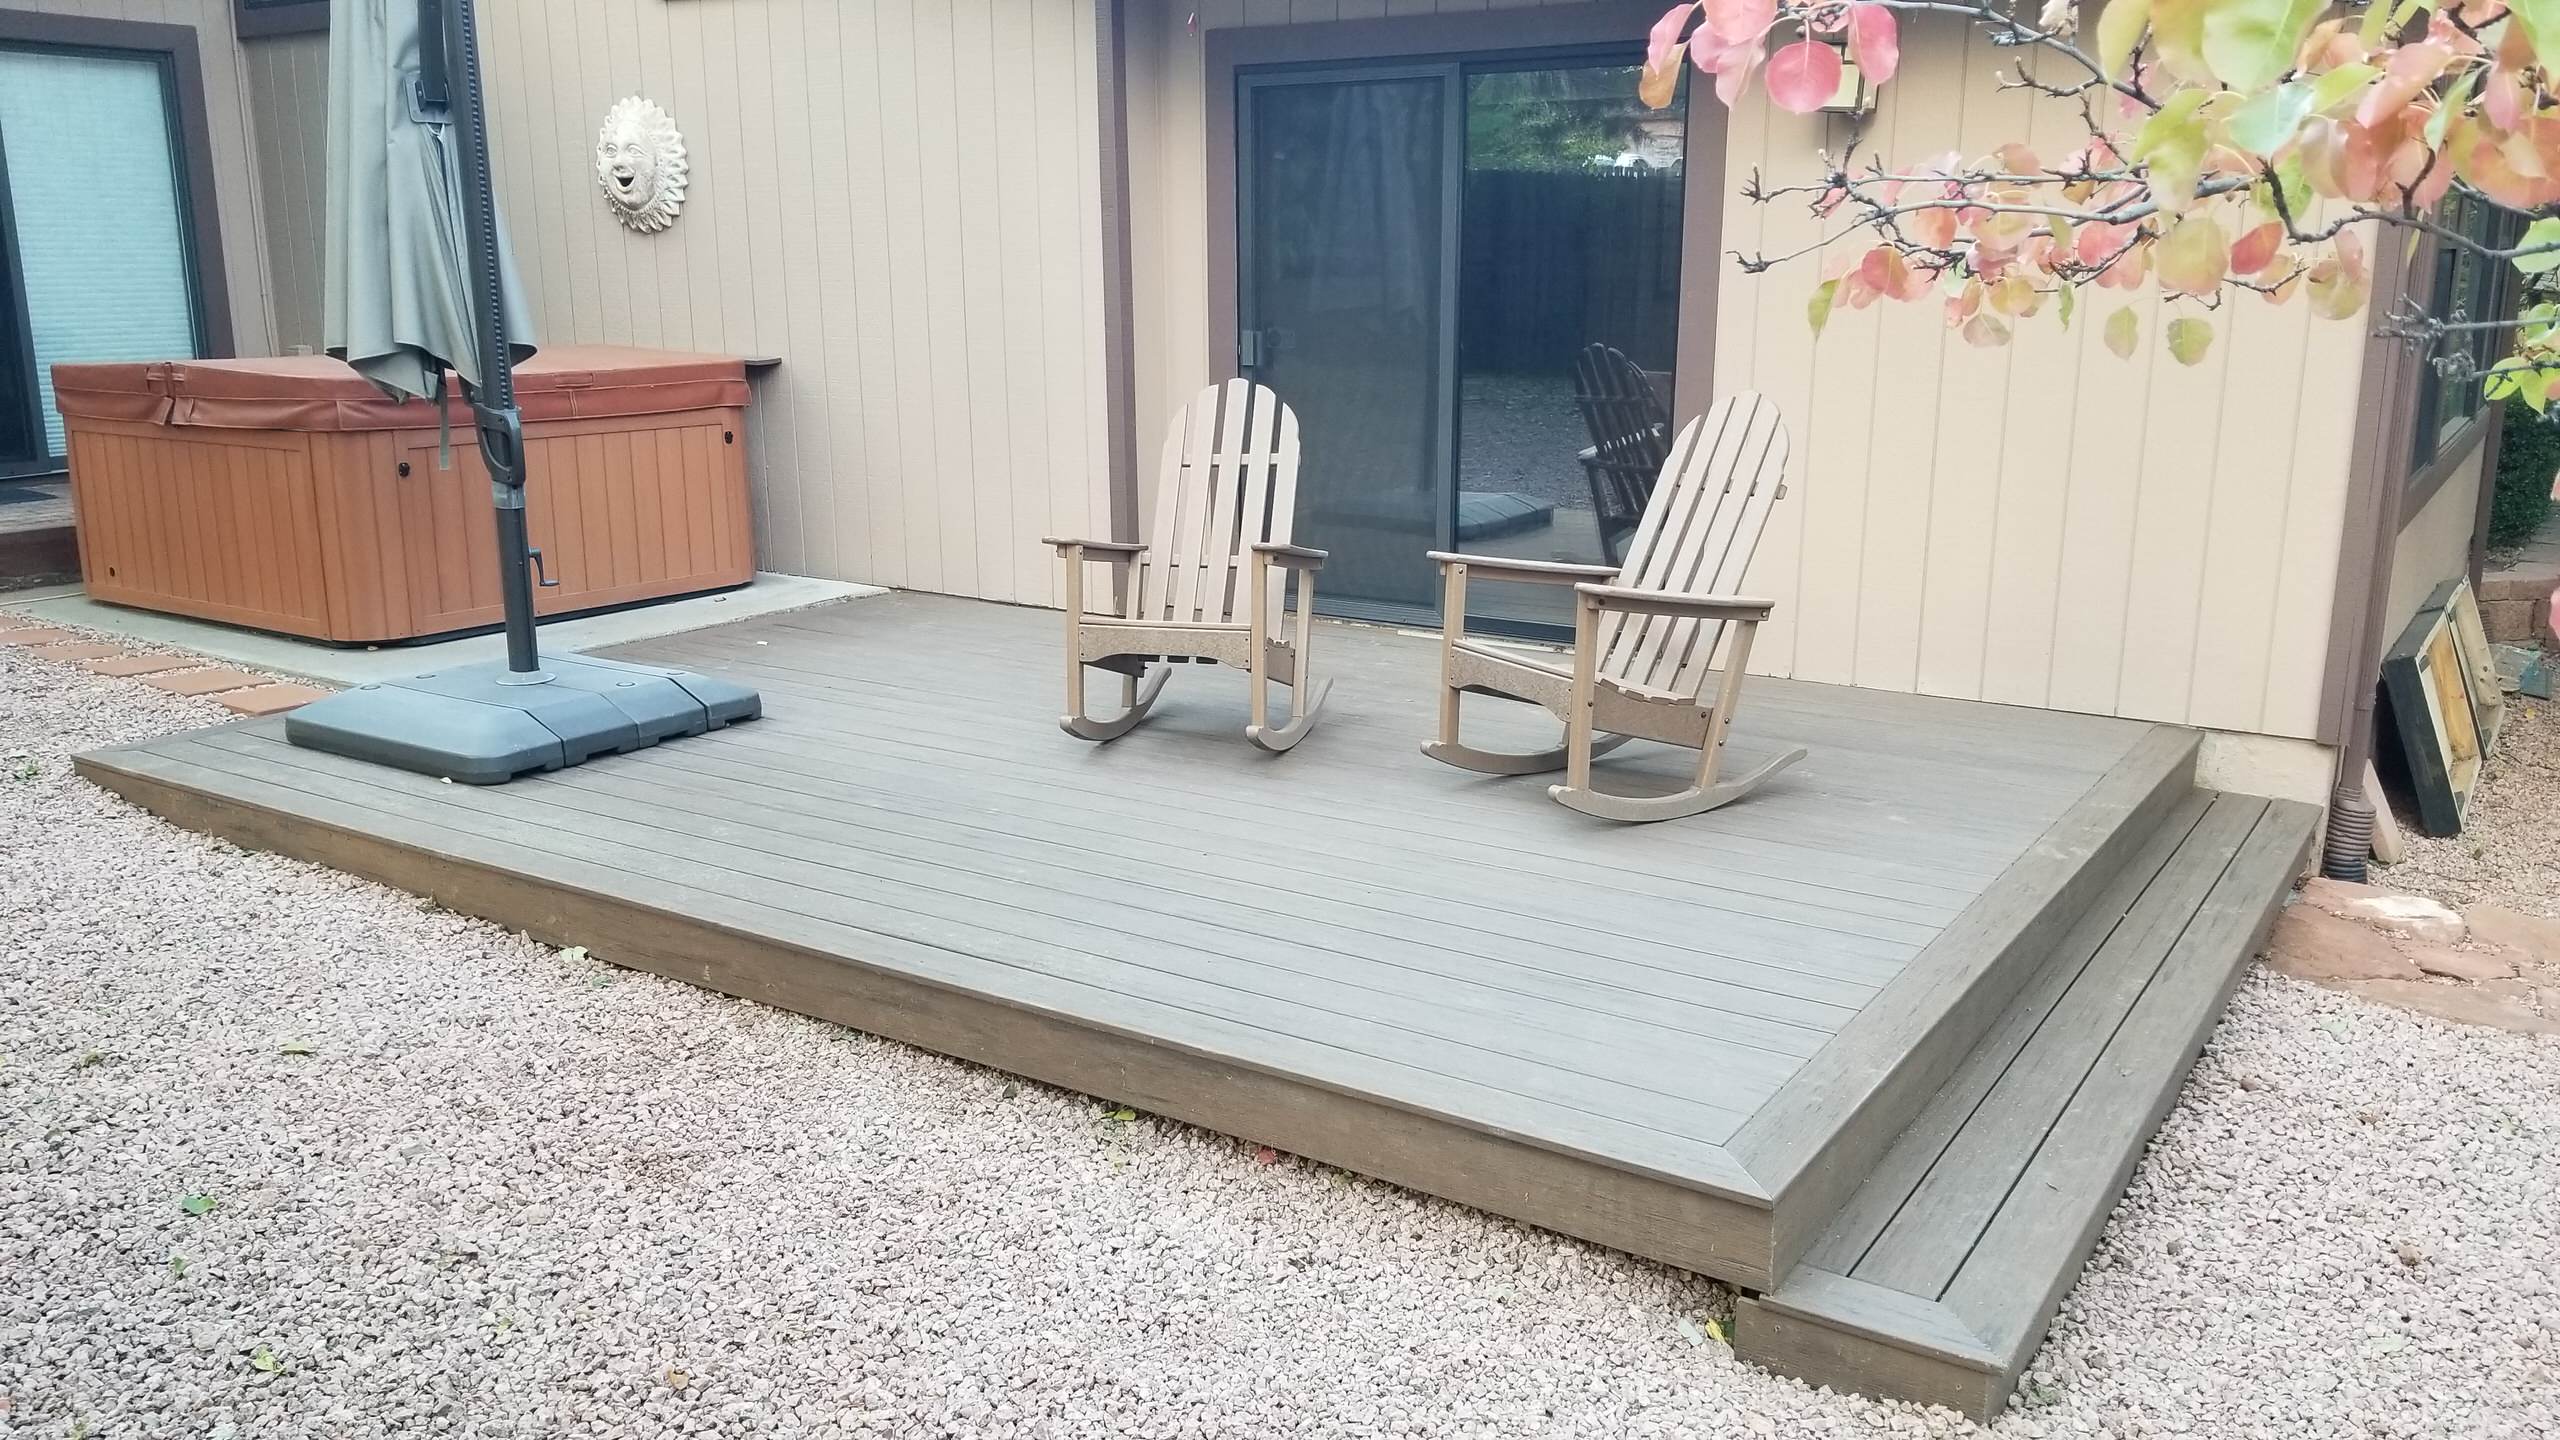 New composite decks are super easy outdoor hangouts: Sedona AZ